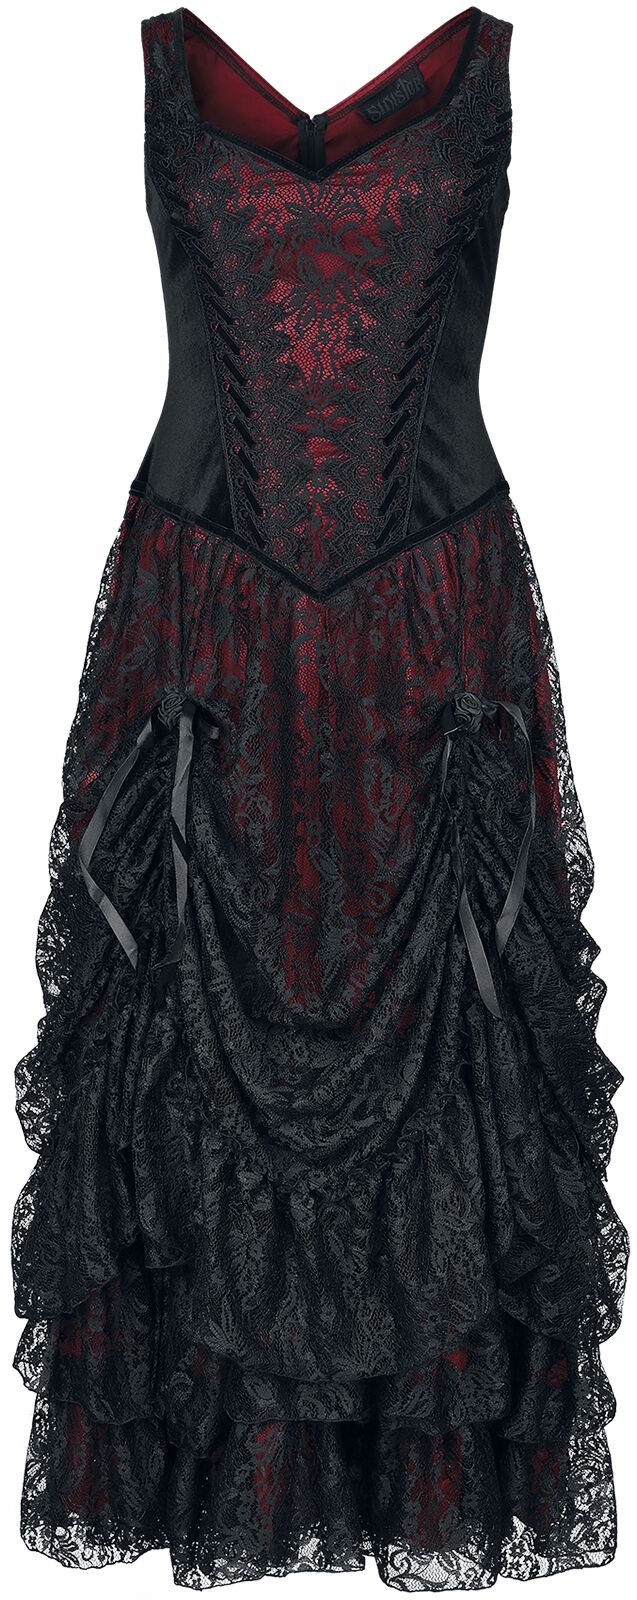 Image of Abito lungo Gothic di Sinister Gothic - Longdress - M a XL - Donna - nero/rosso